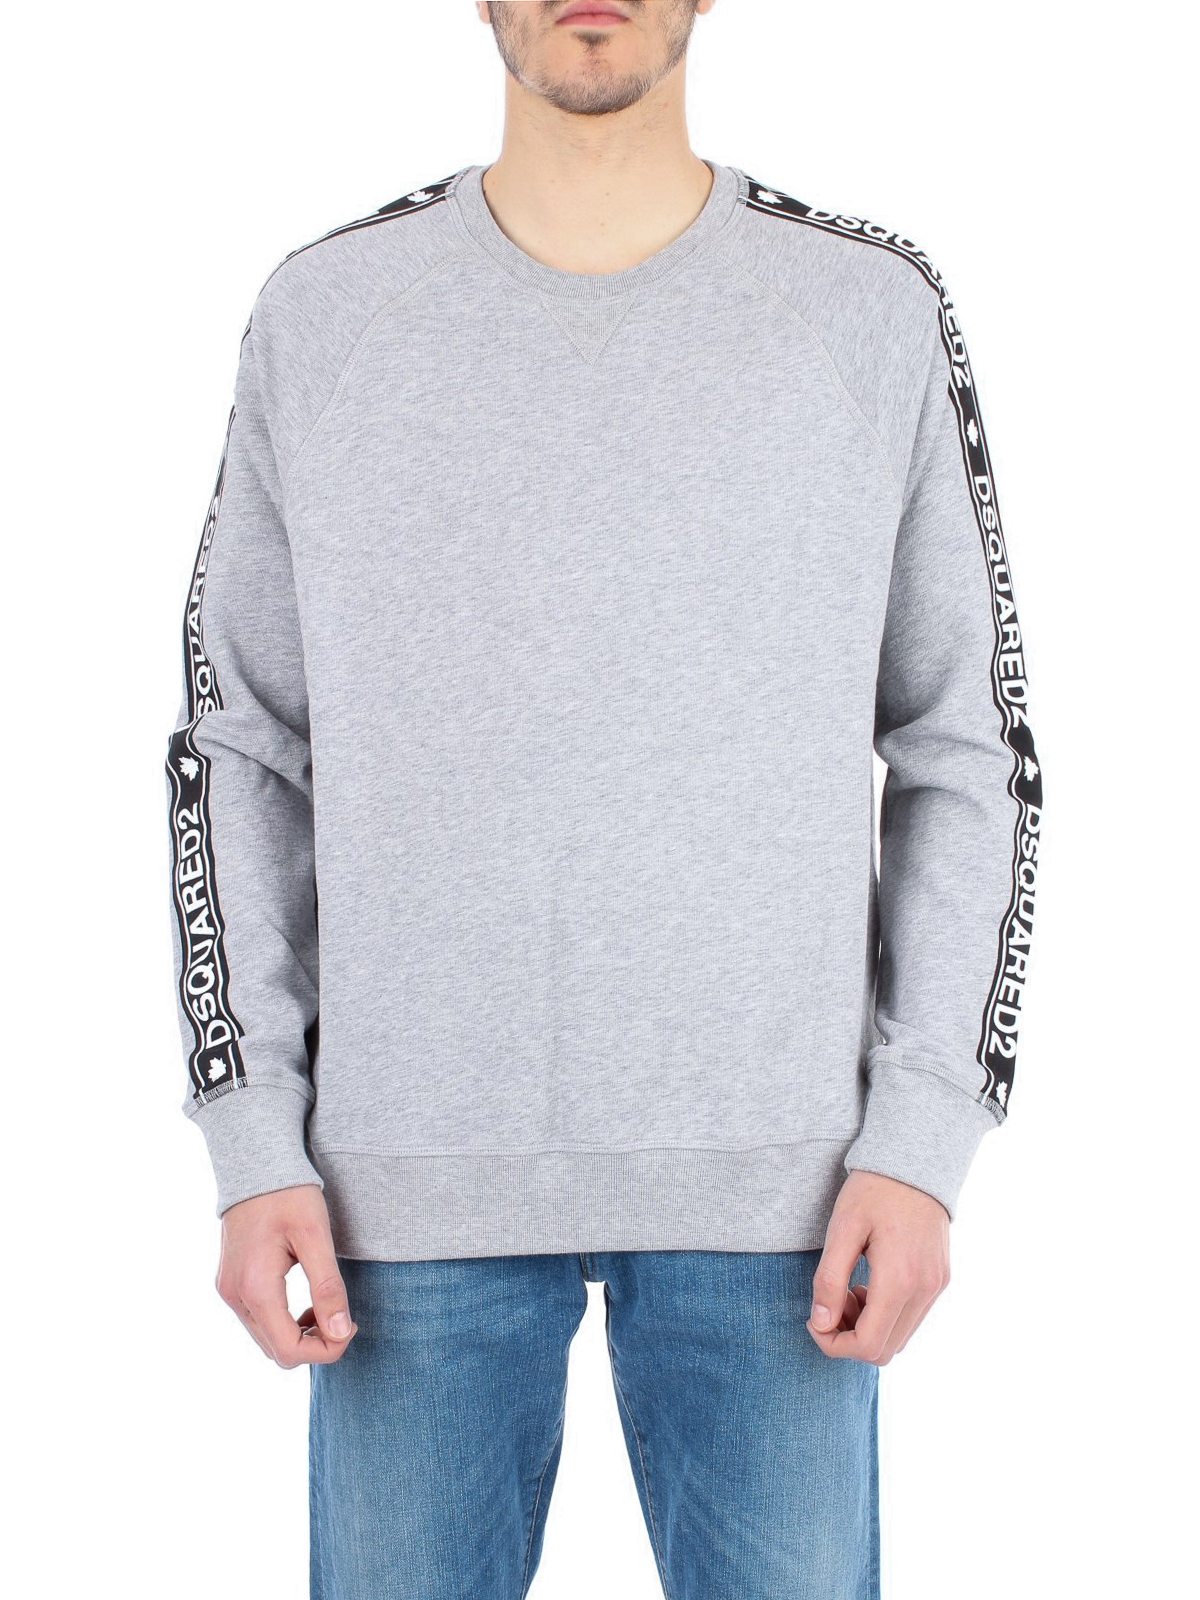 dsquared2 hoodie grey